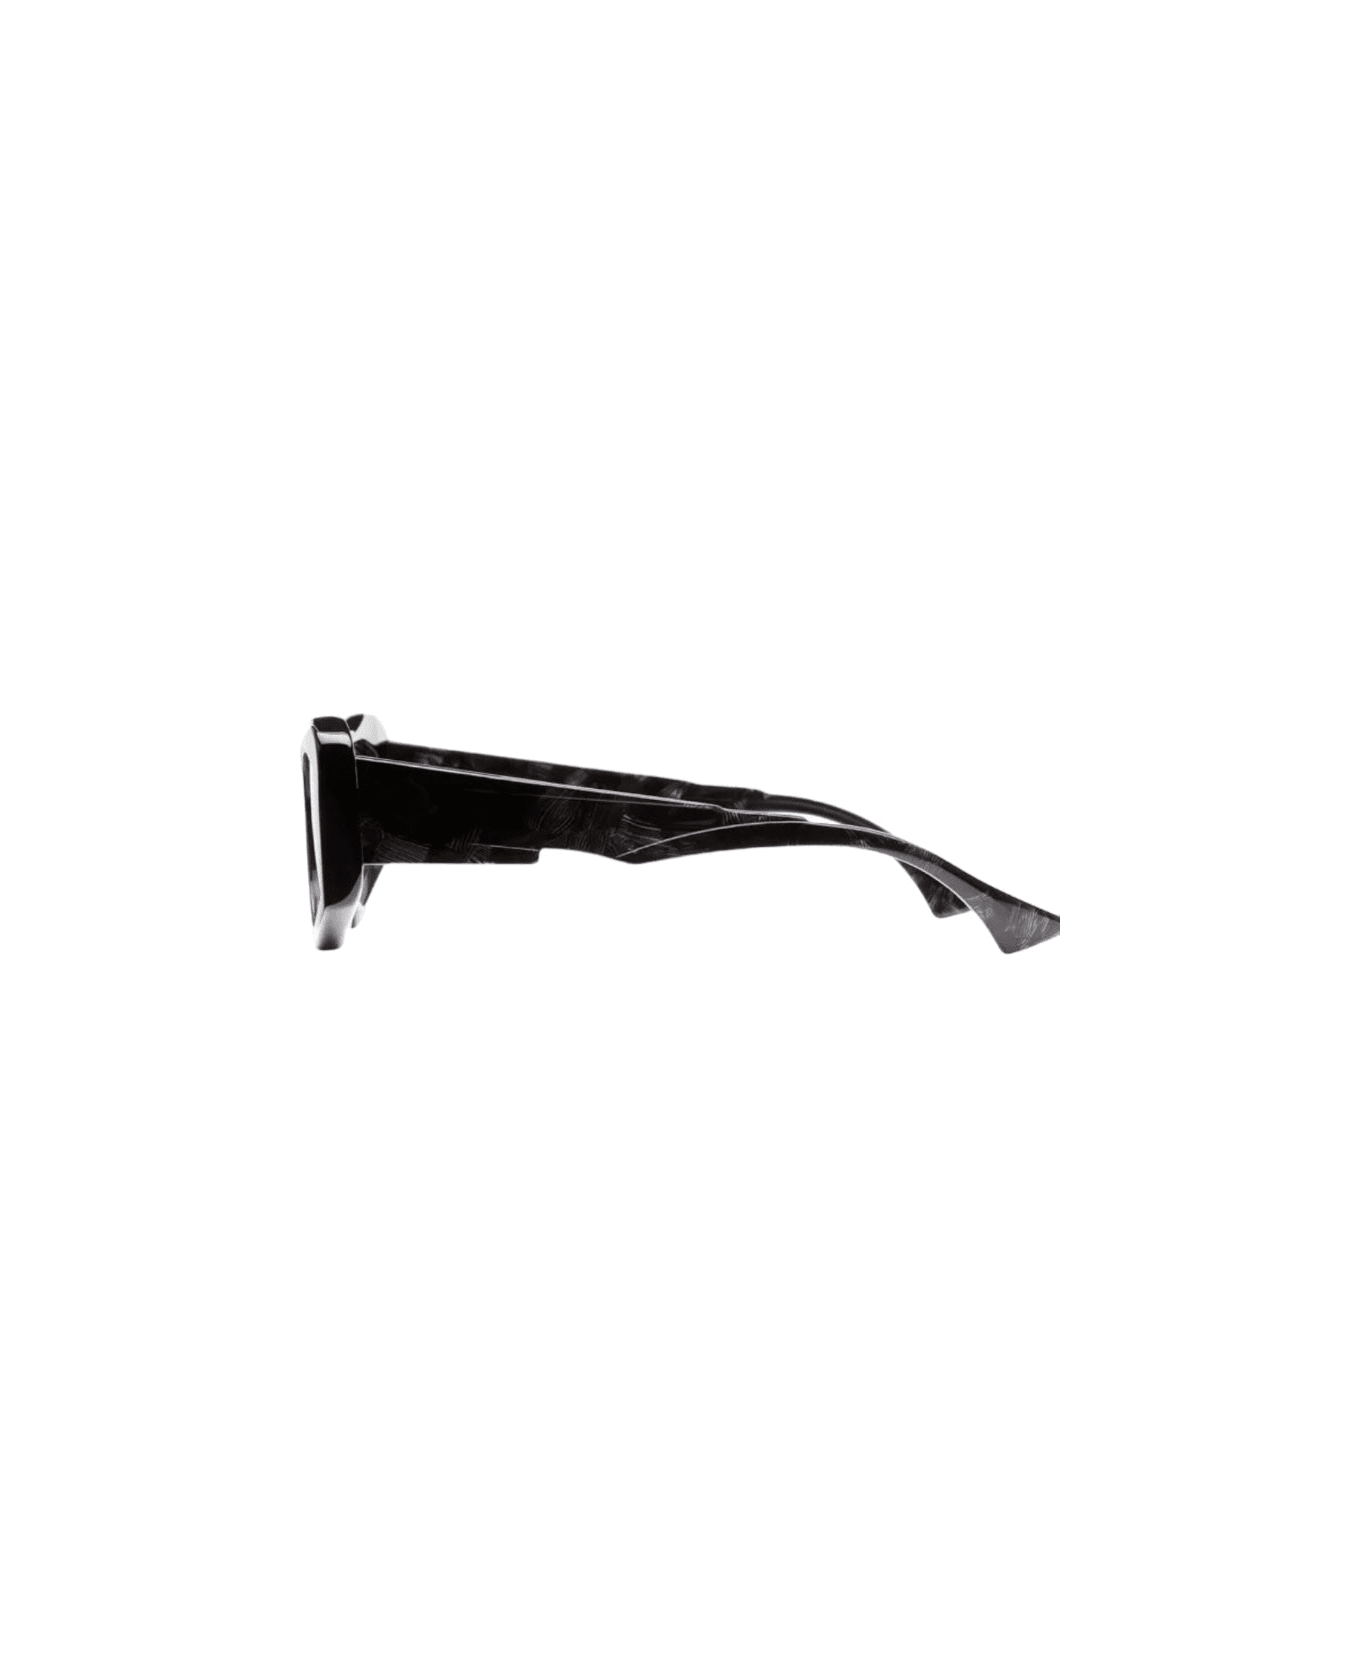 Kuboraum Maske F6 - Black Glasses